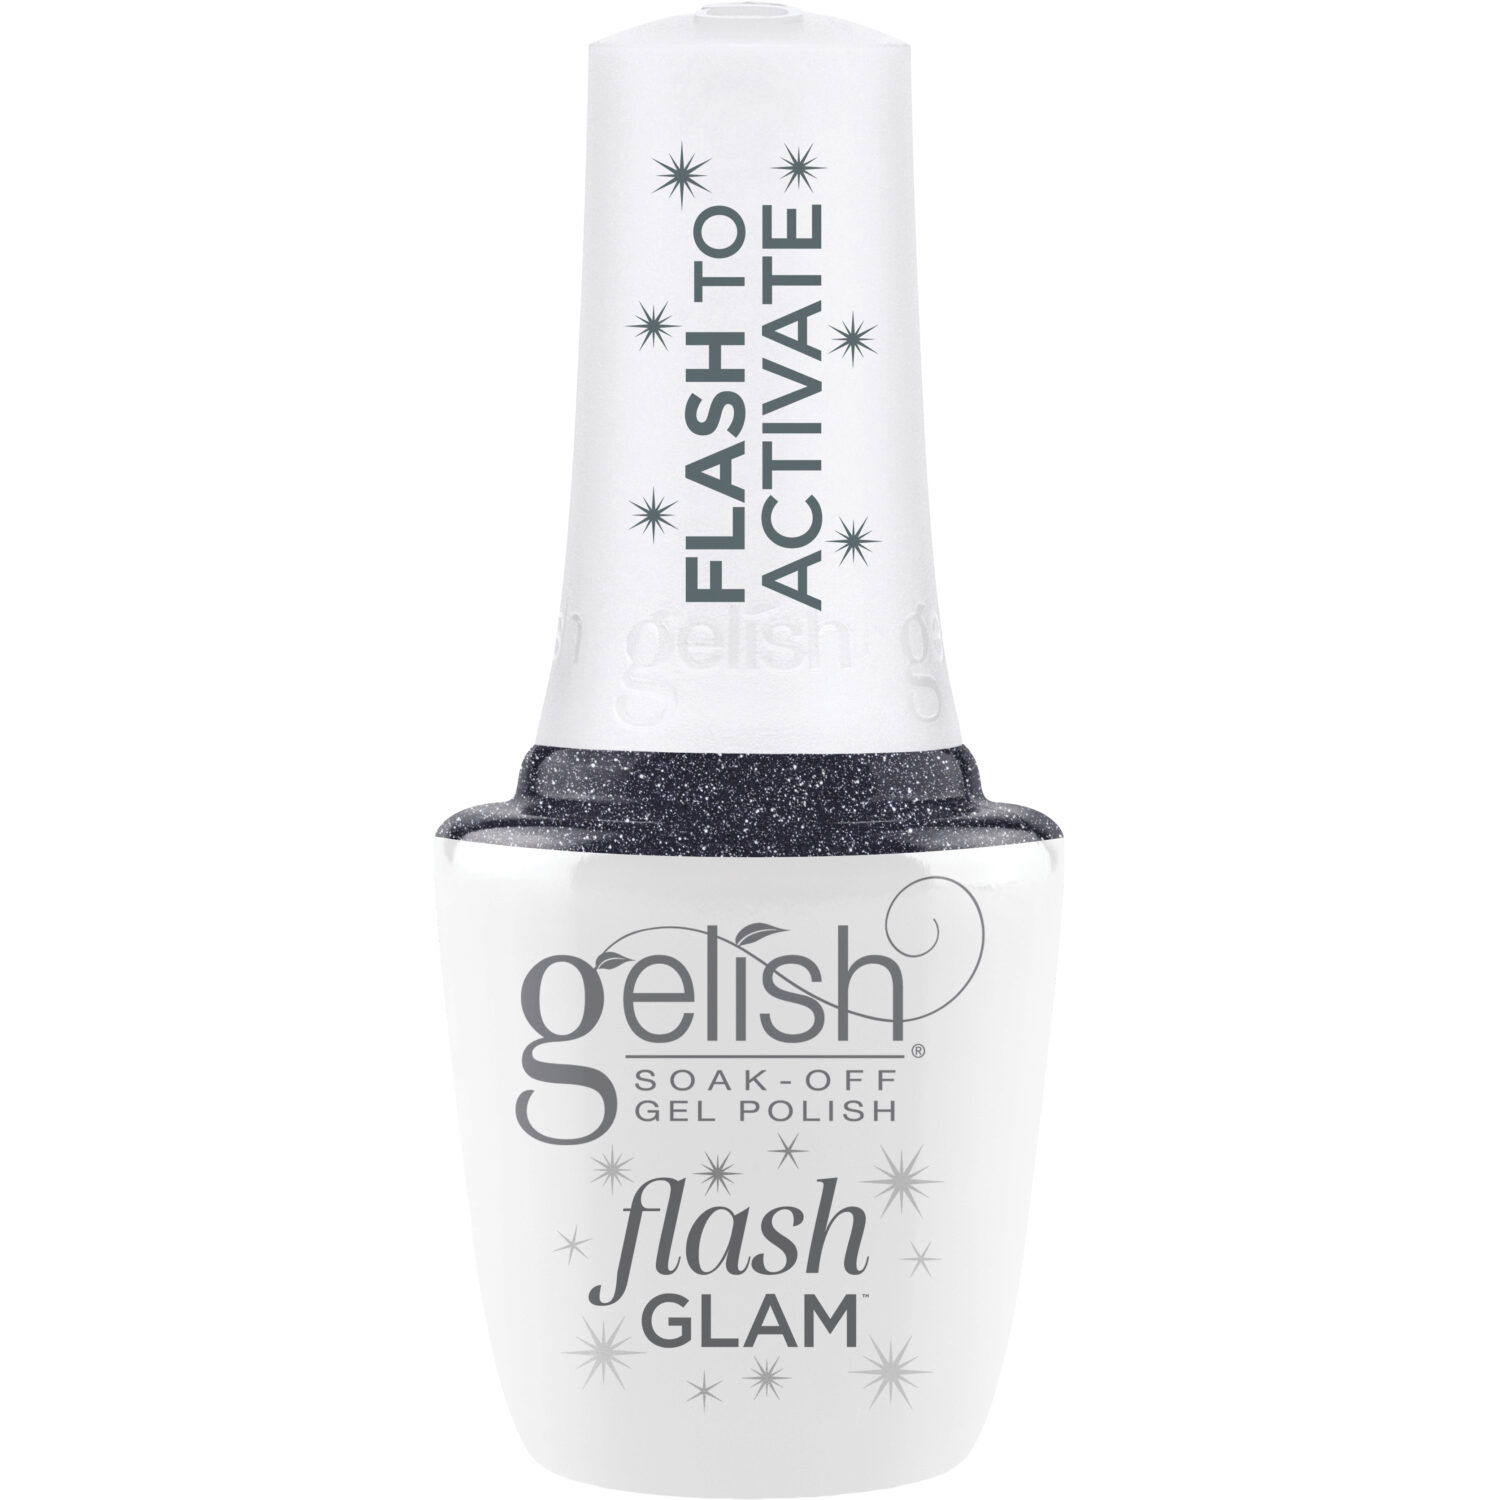 Gelish Flash Glam Never Stop Glistening Glitter Gel Polish, 0.5 fl oz.